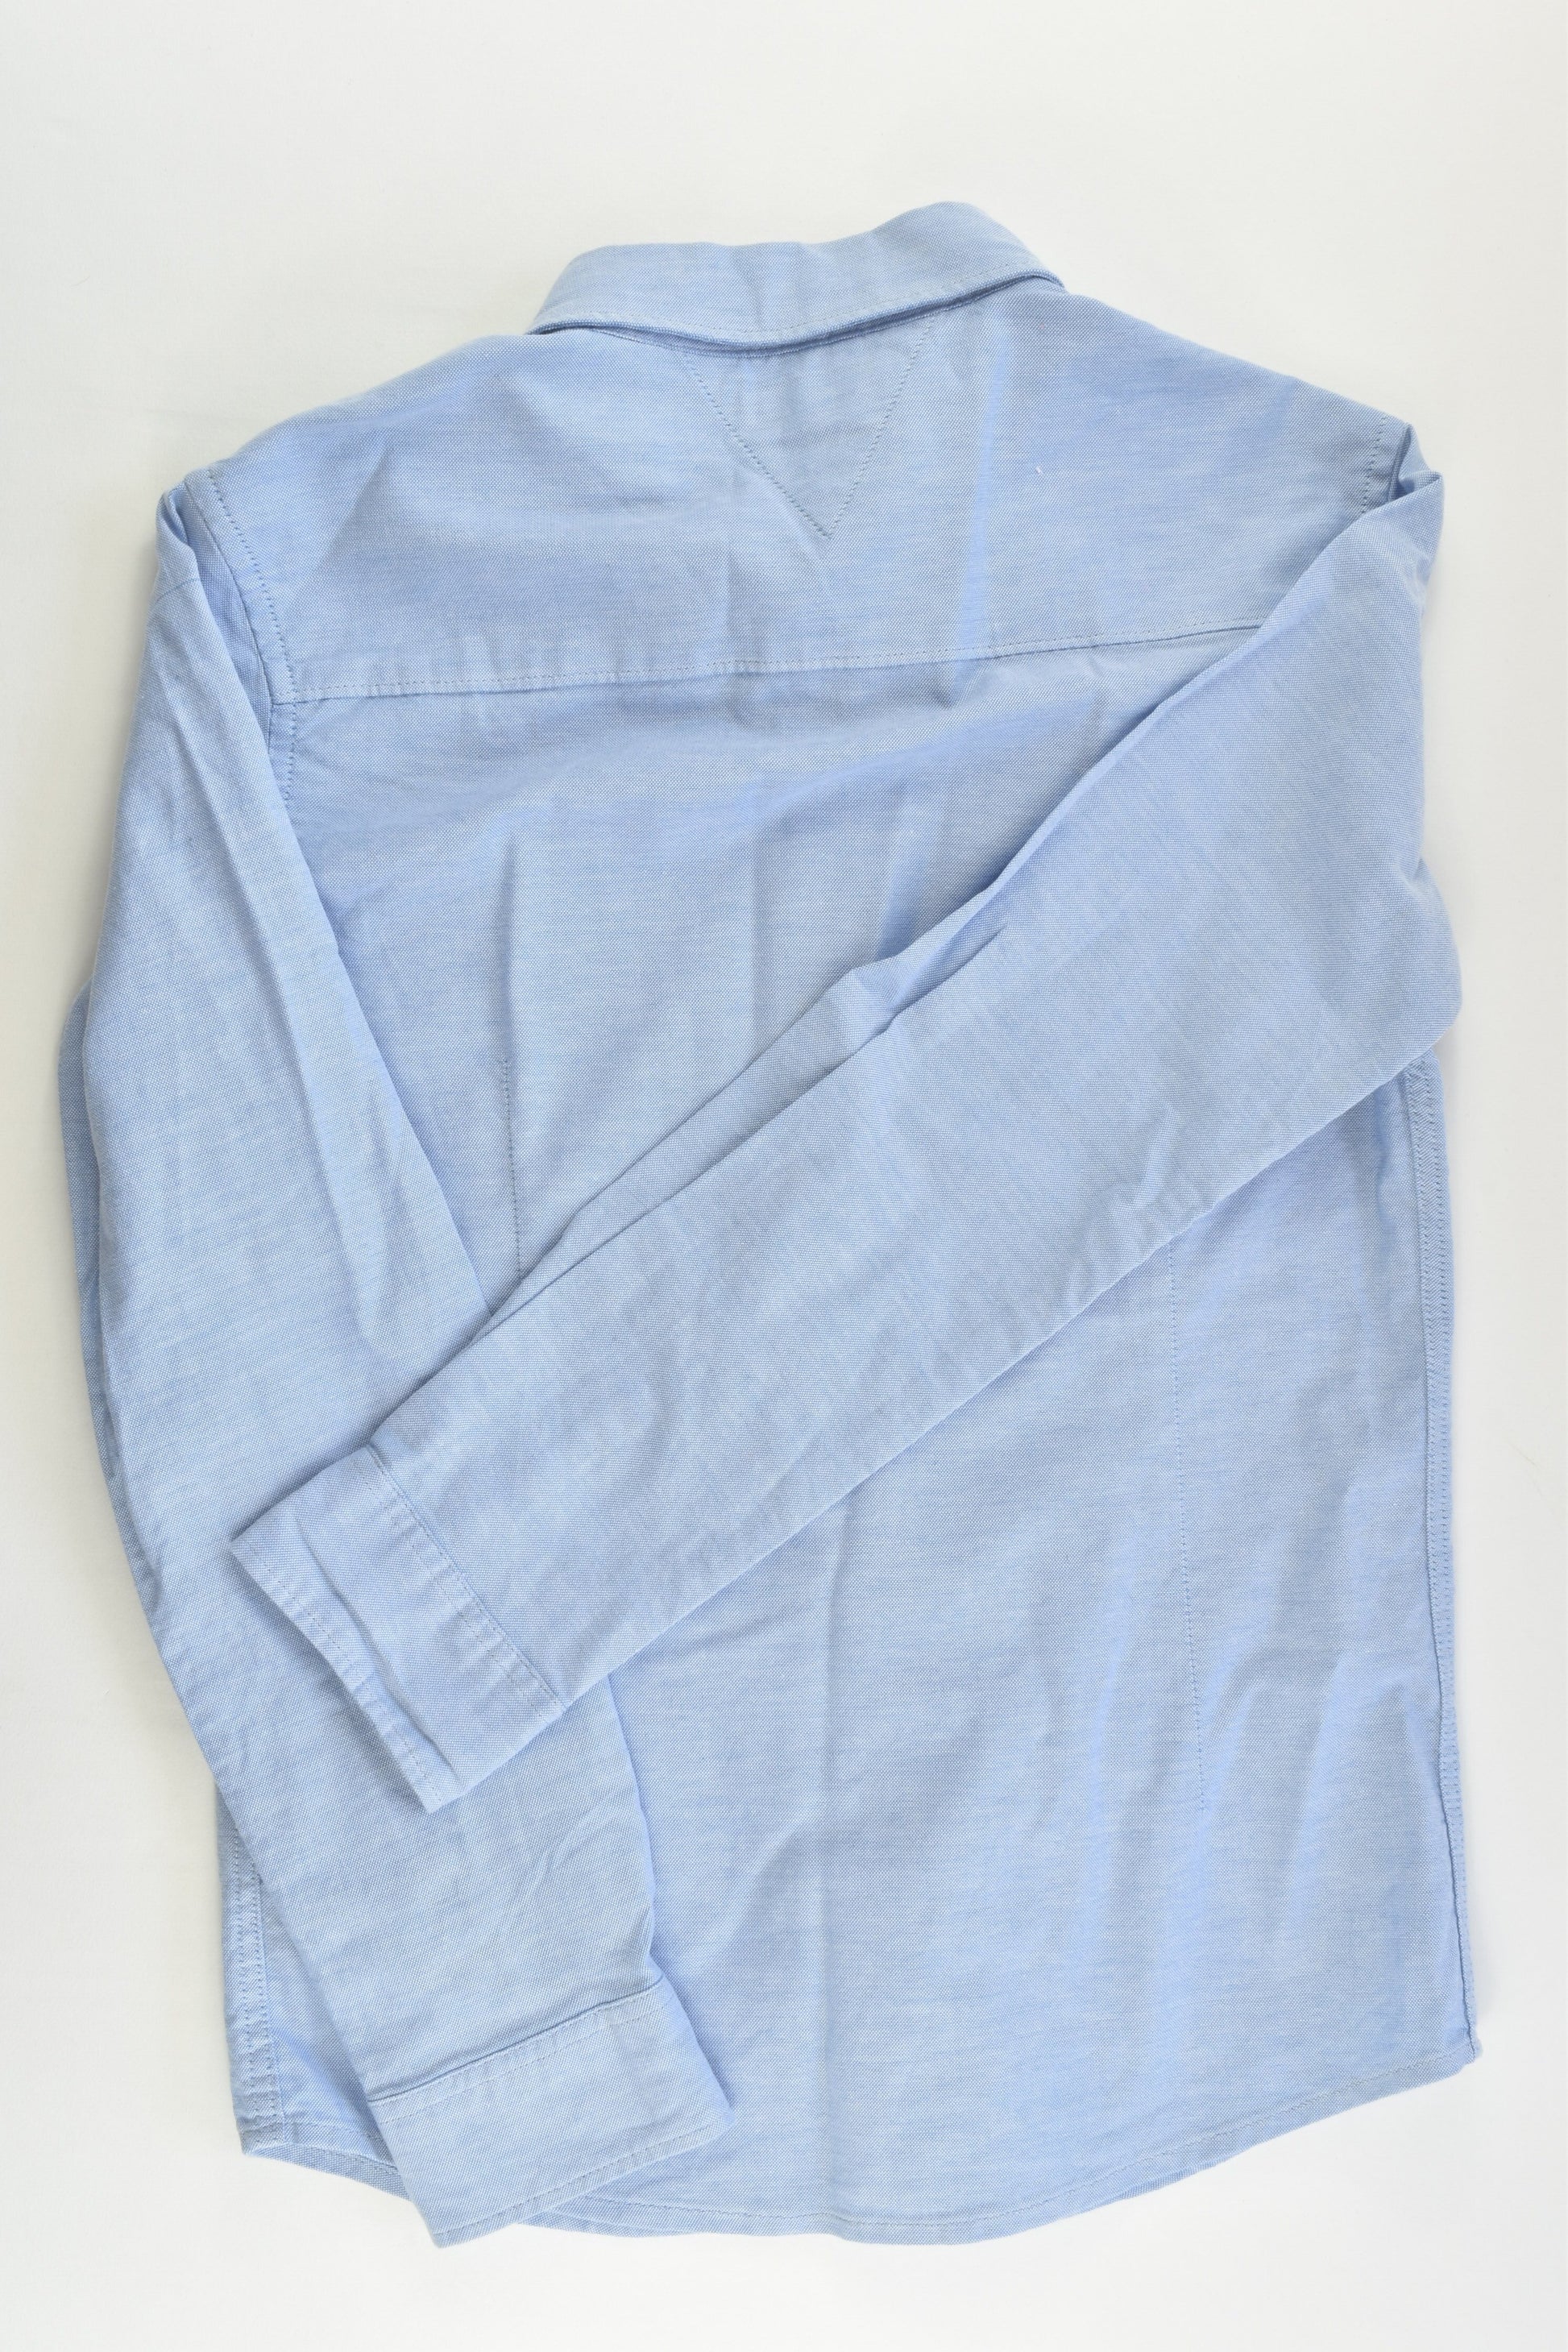 Tommy Hilfiger Size 10 (140 cm) Shirt